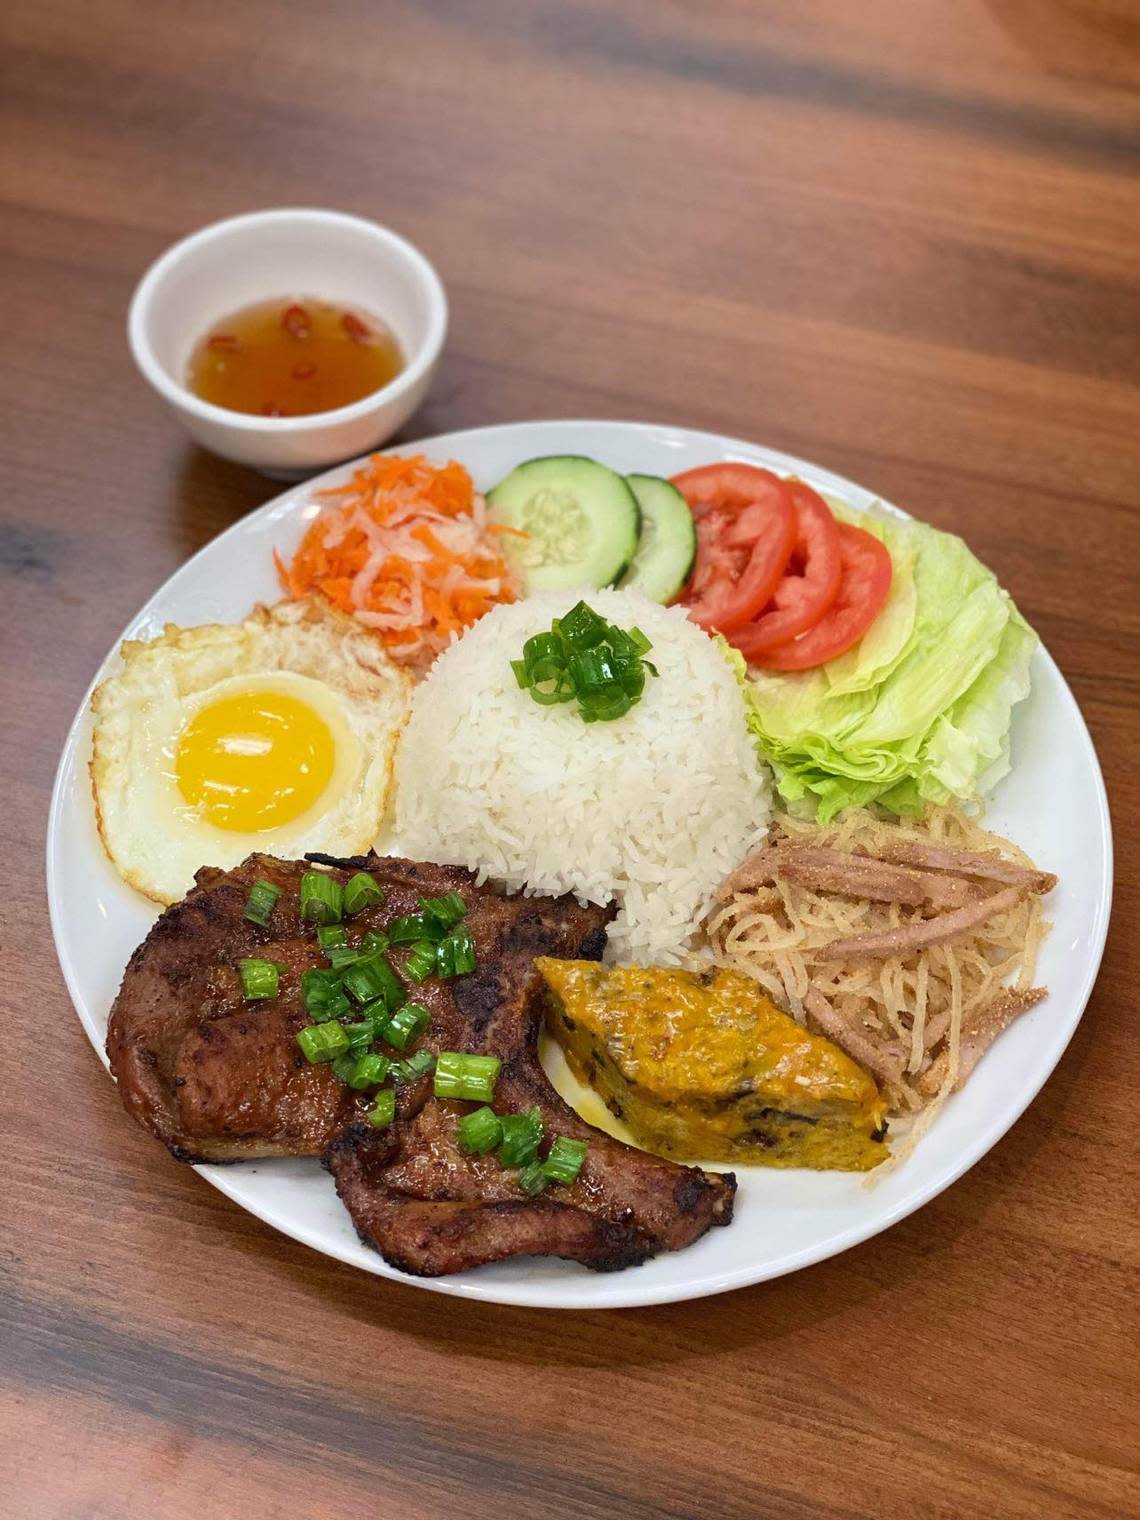 The Special Rice Platter ($15.49) is steamed rice with pork chop, shredded pork, Vietnamese steamed meatloaf and an egg served sunny-side up.